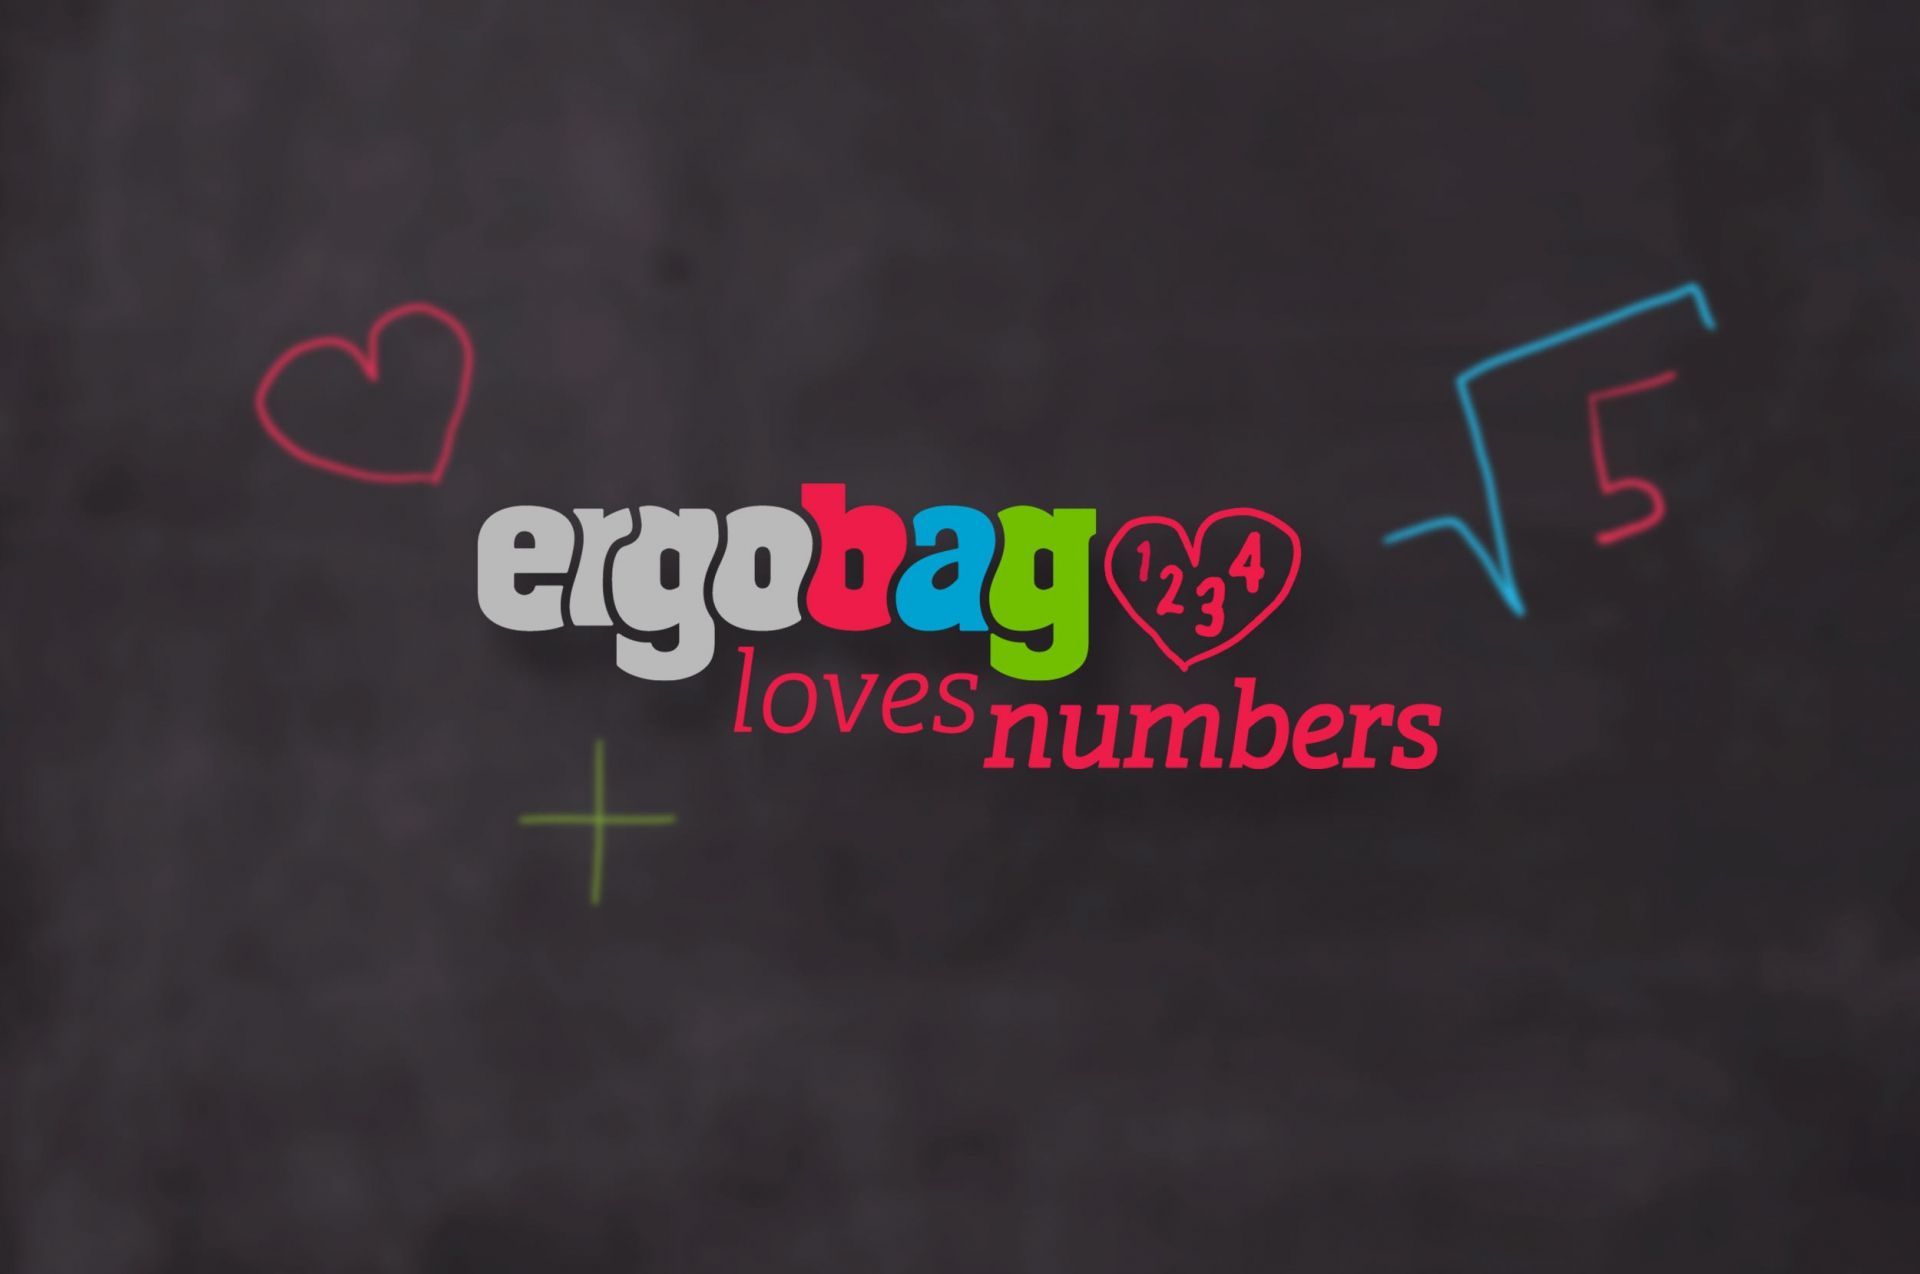 ergobag-loves-numbers